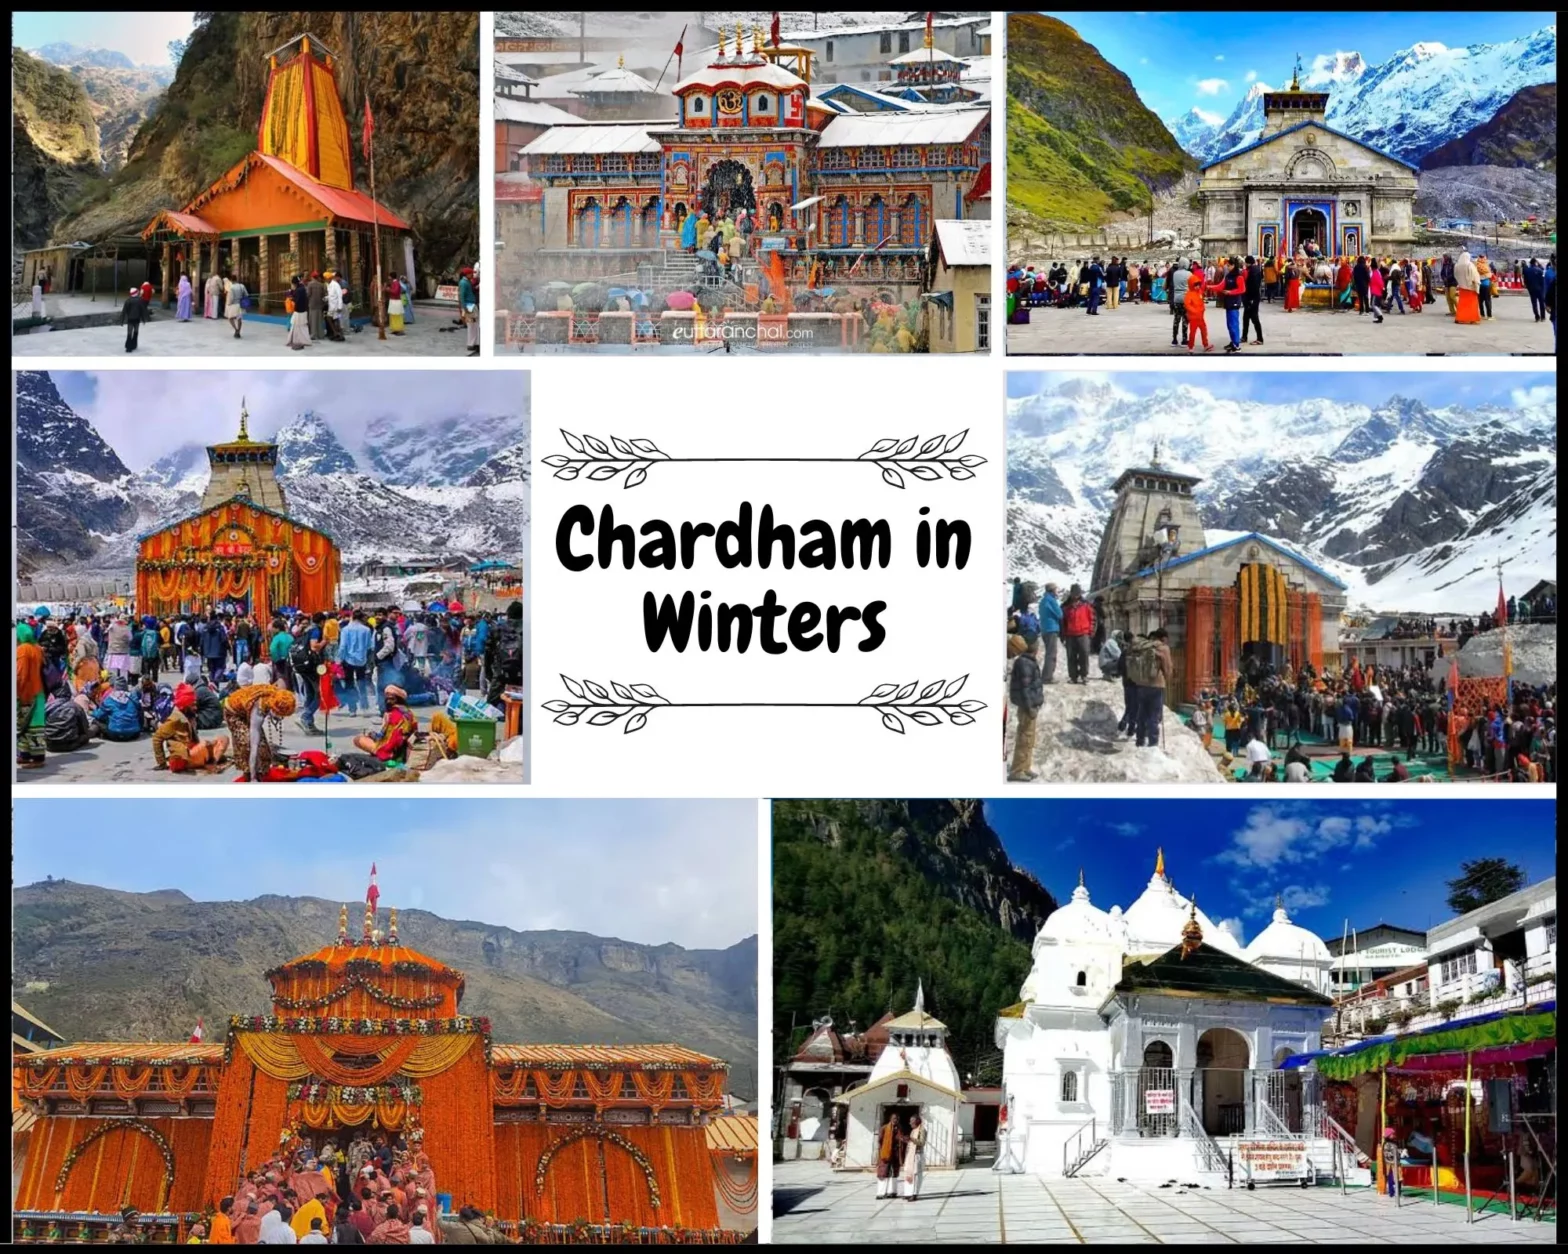 Chardham yatra in Winters